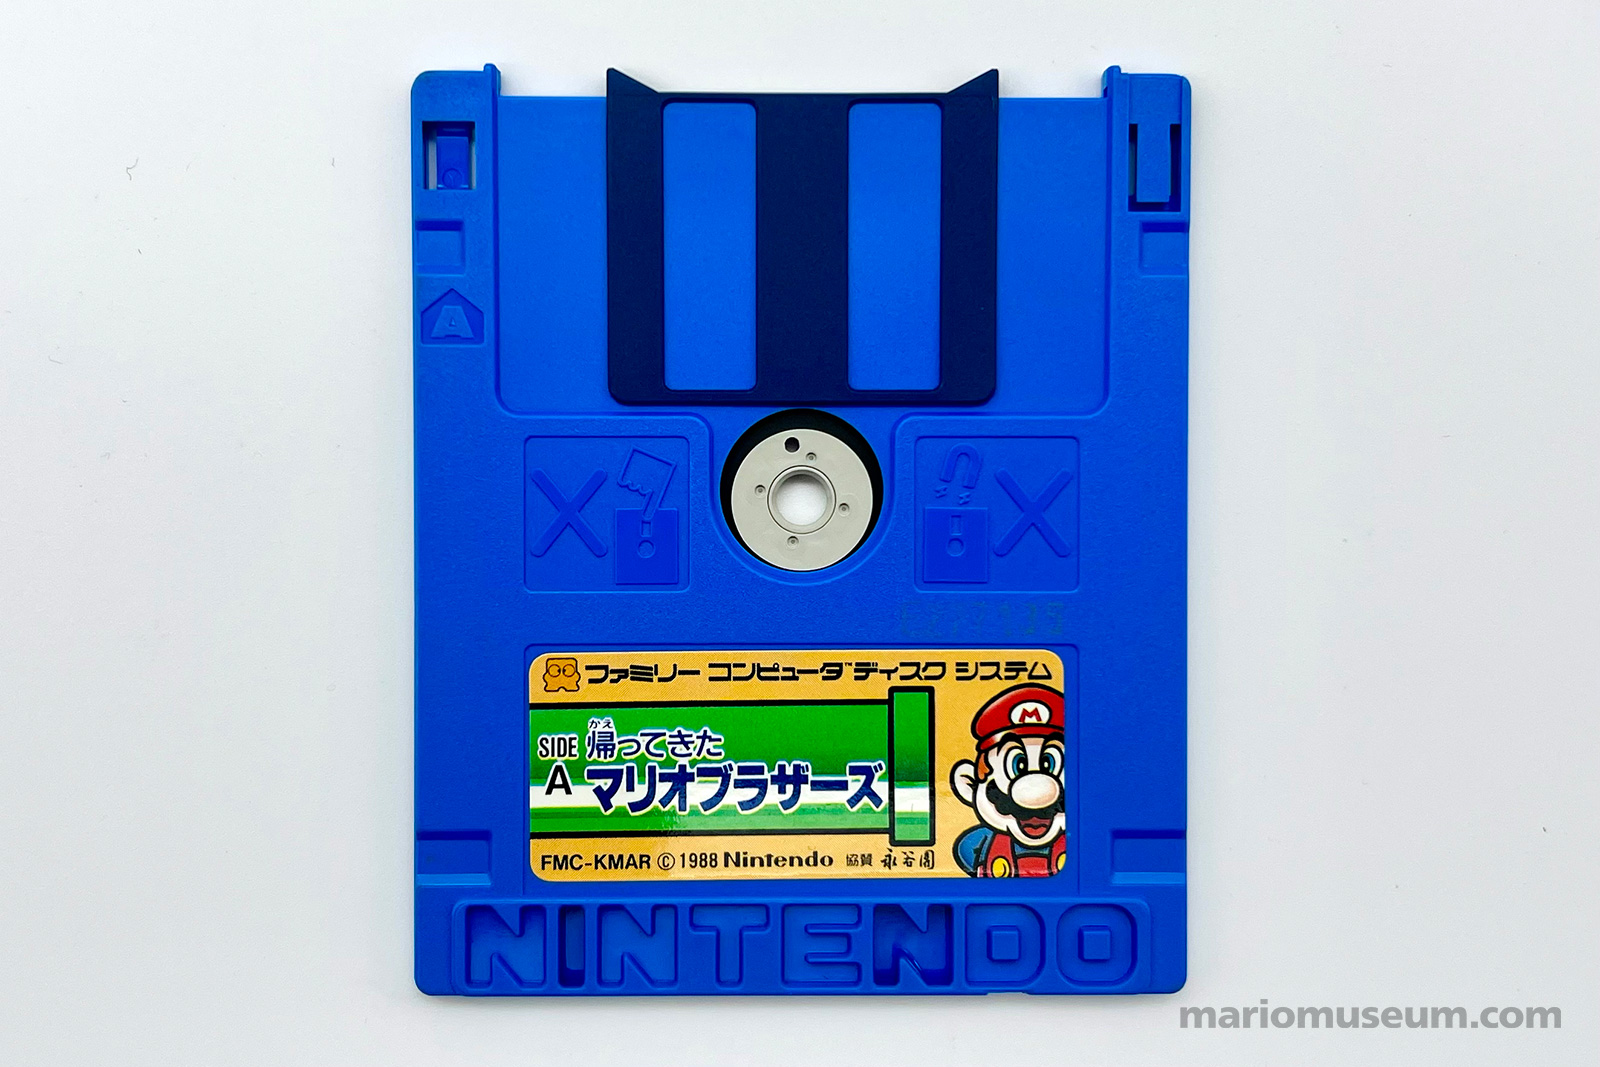 The Return of Mario Bros (Blue disk writer version)